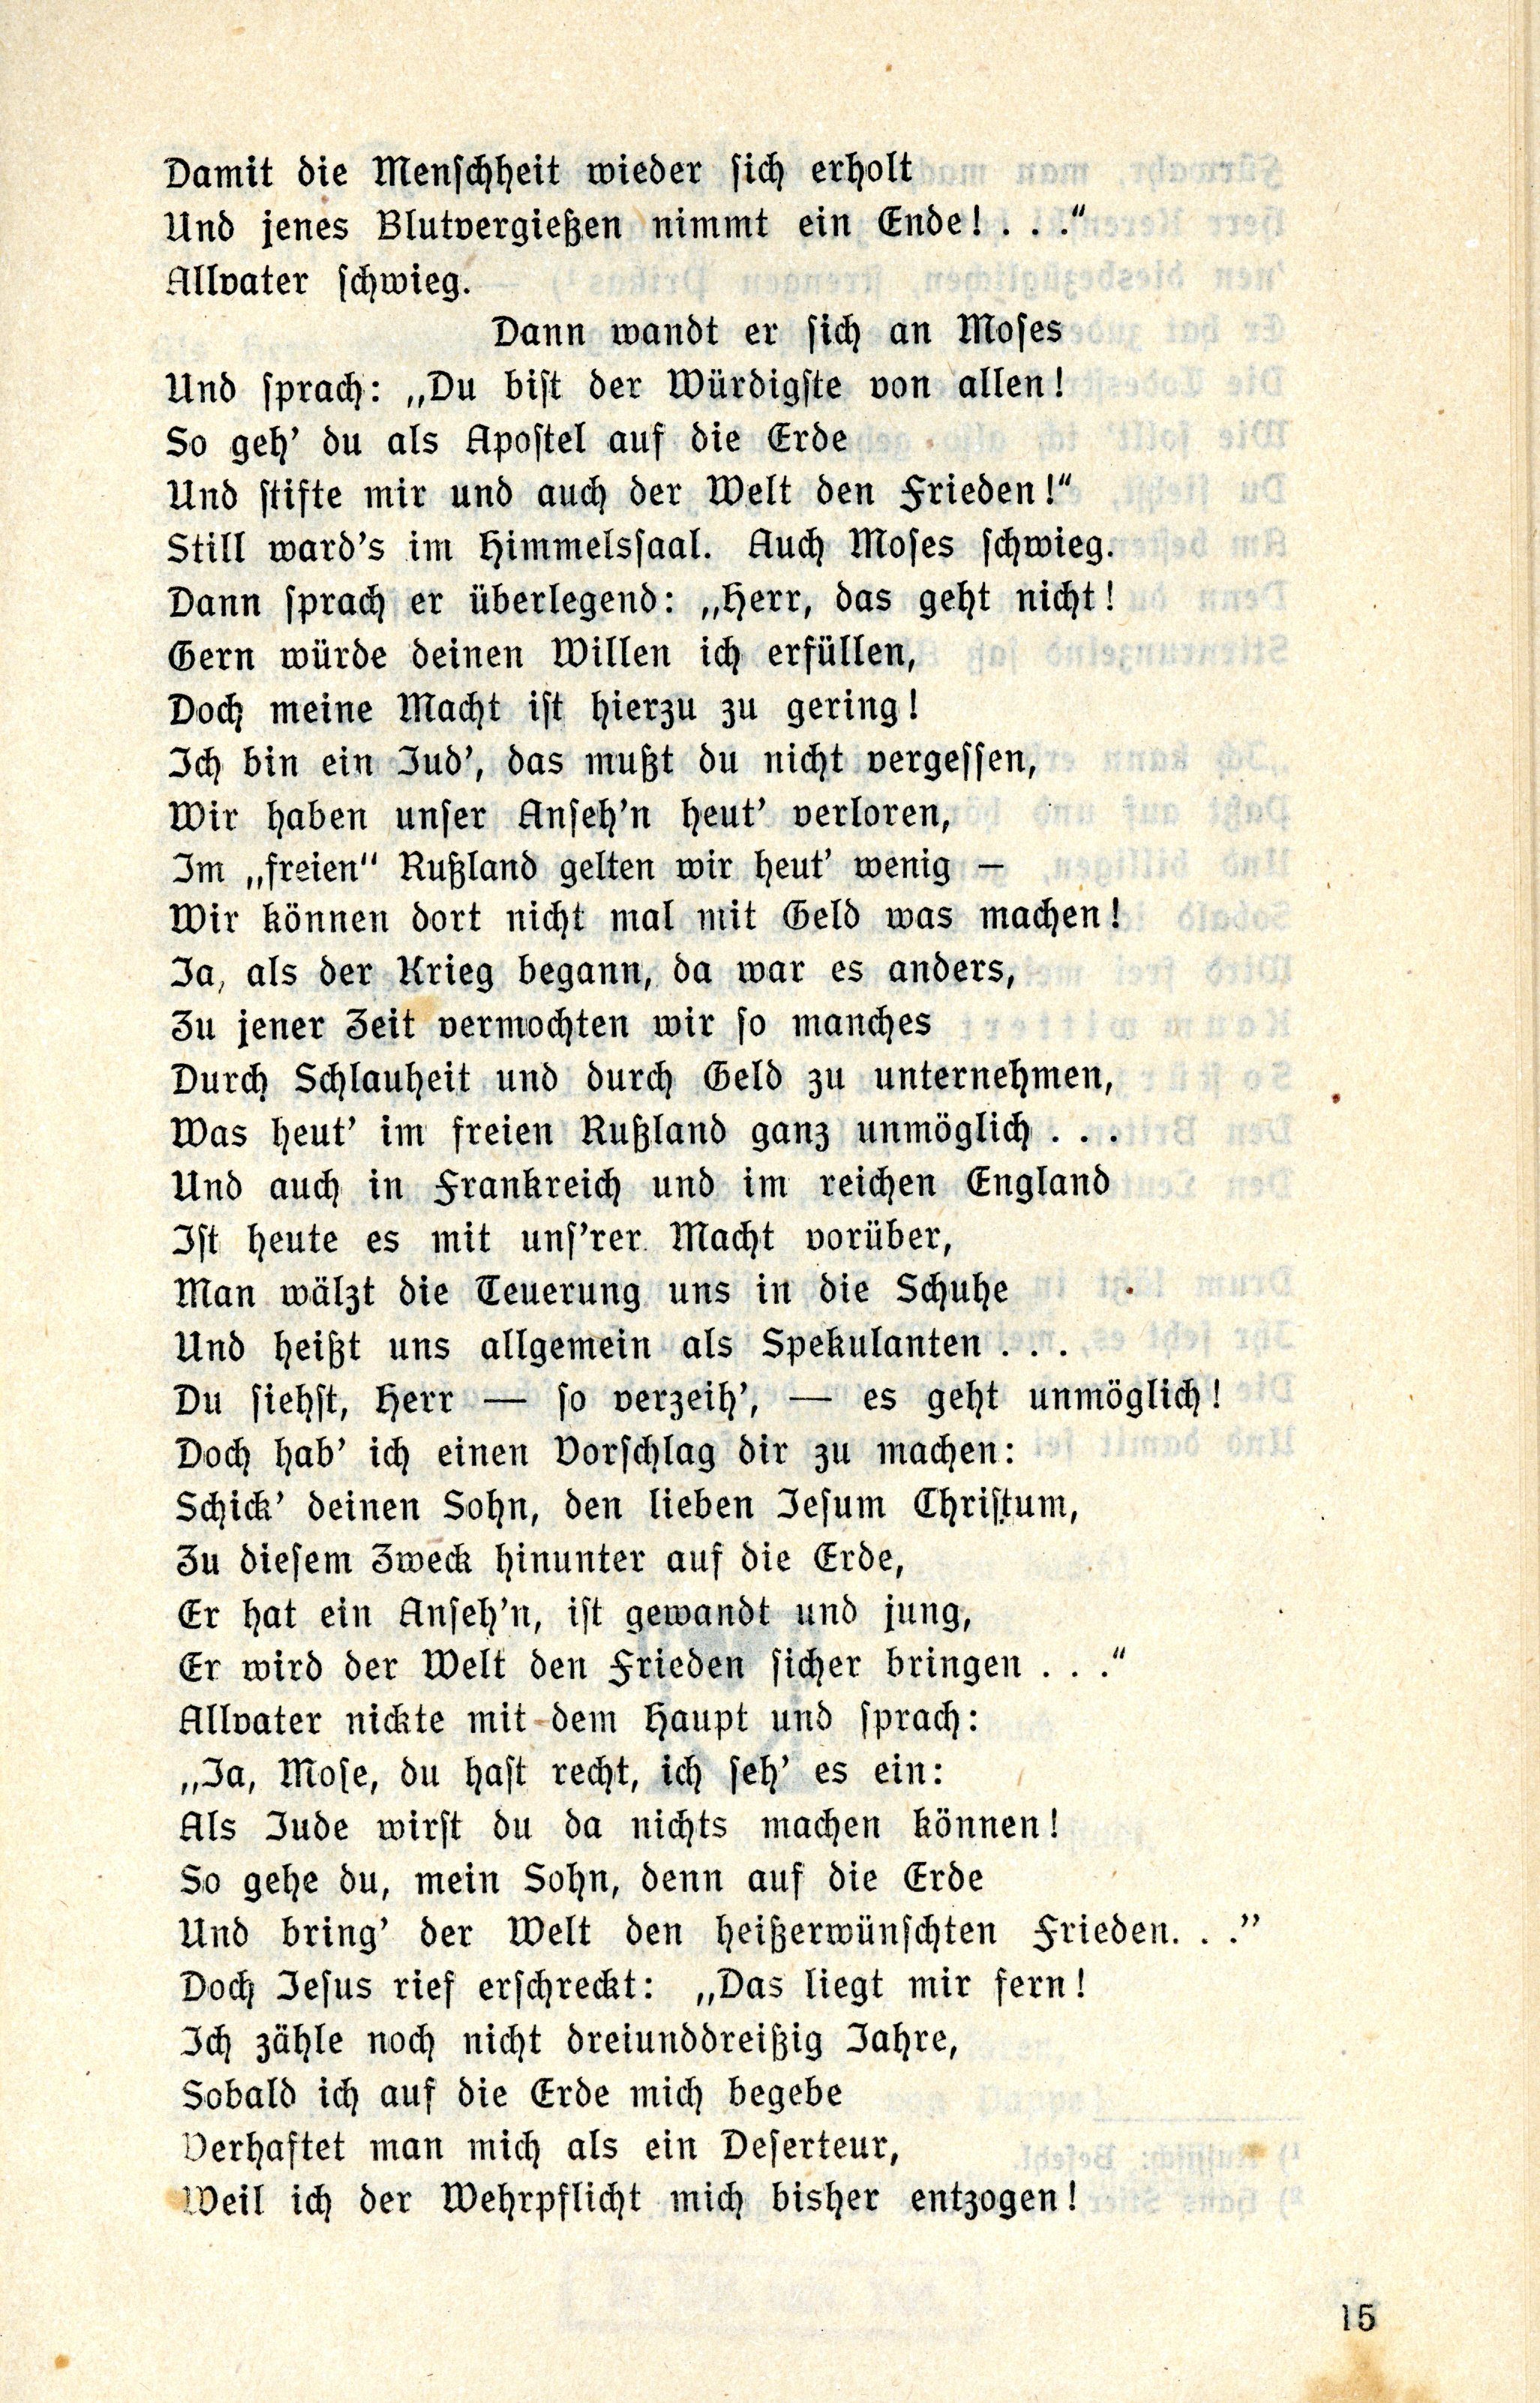 Der Balte im Maulkorb (1917) | 16. (15) Основной текст